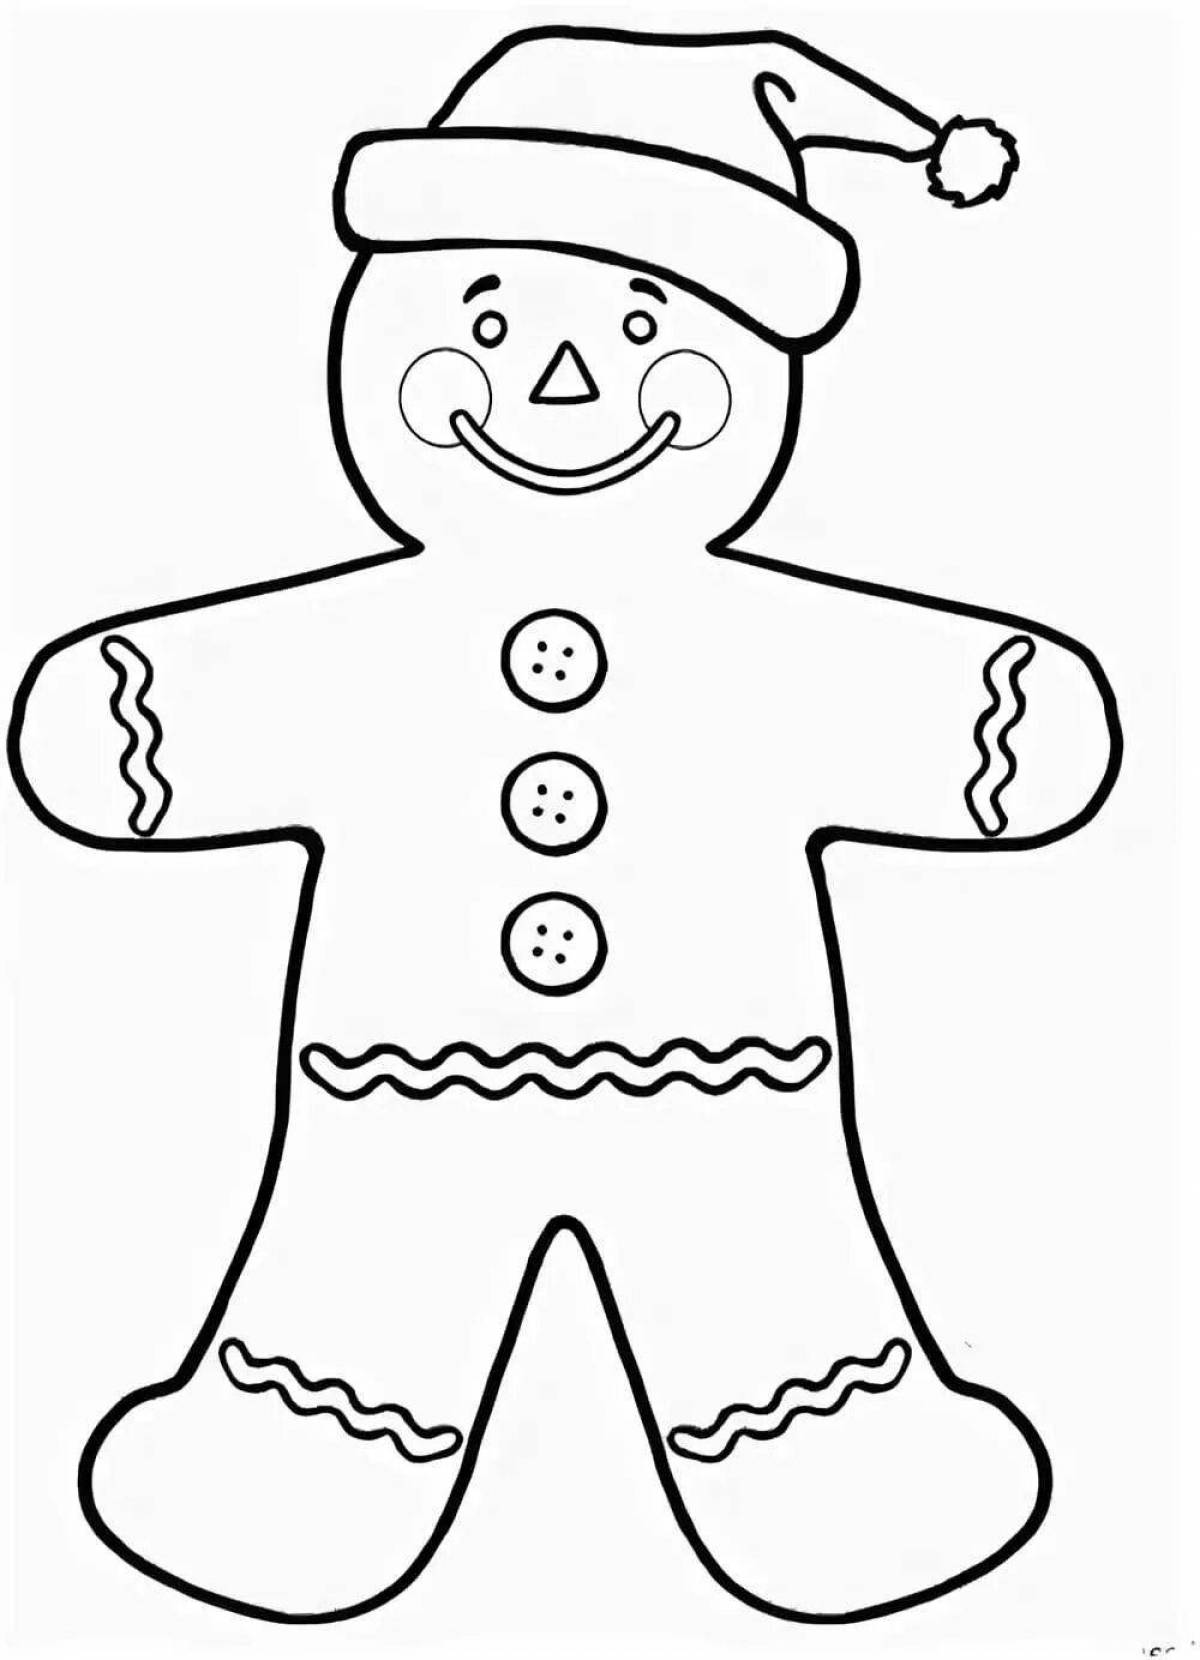 Coloring creative gingerbread man